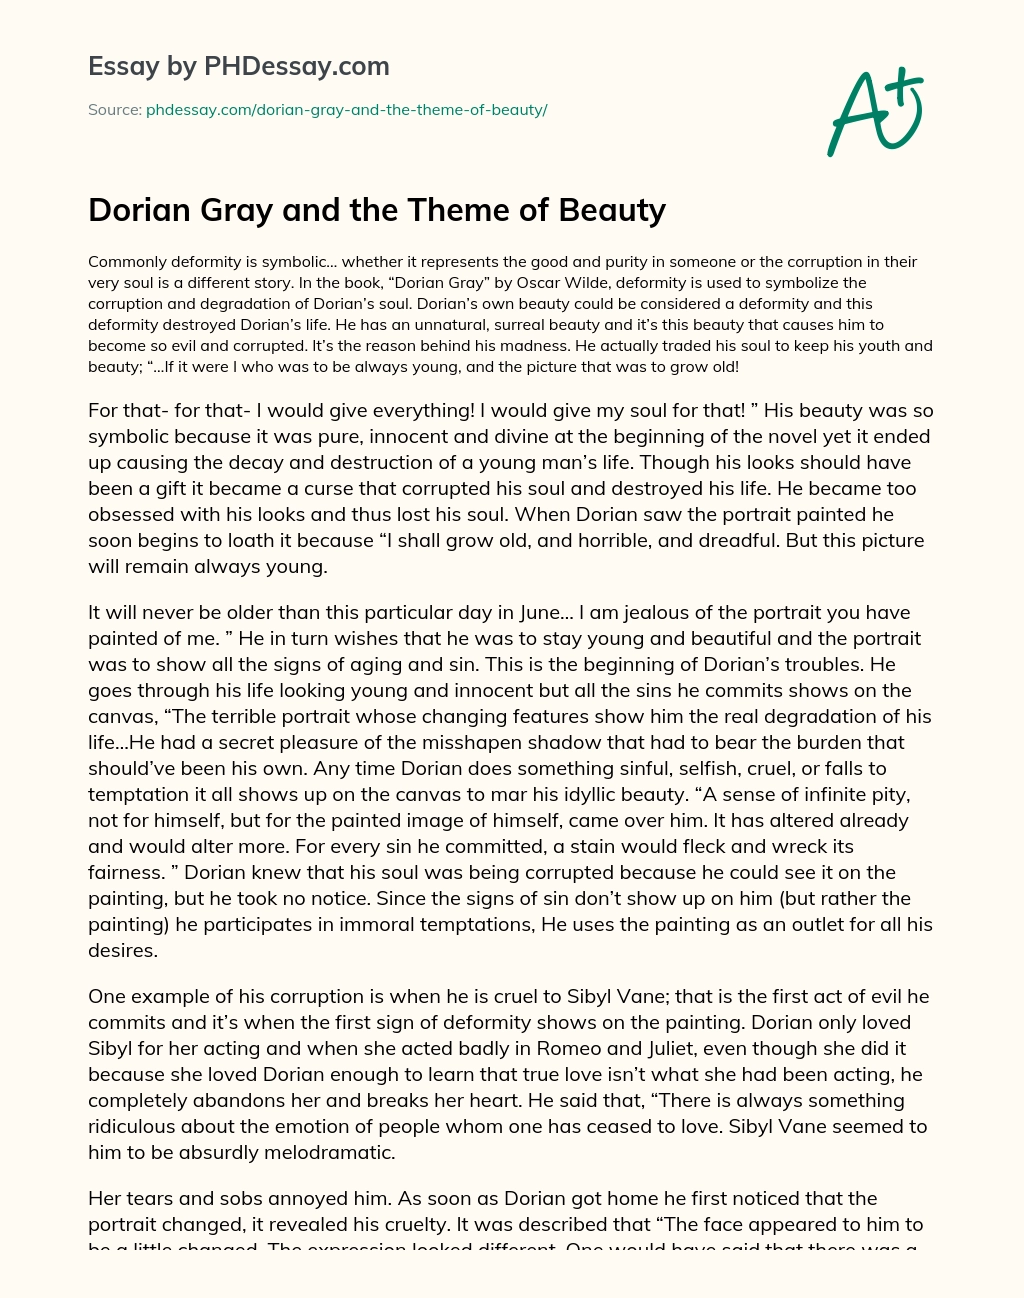 theme of beauty essay